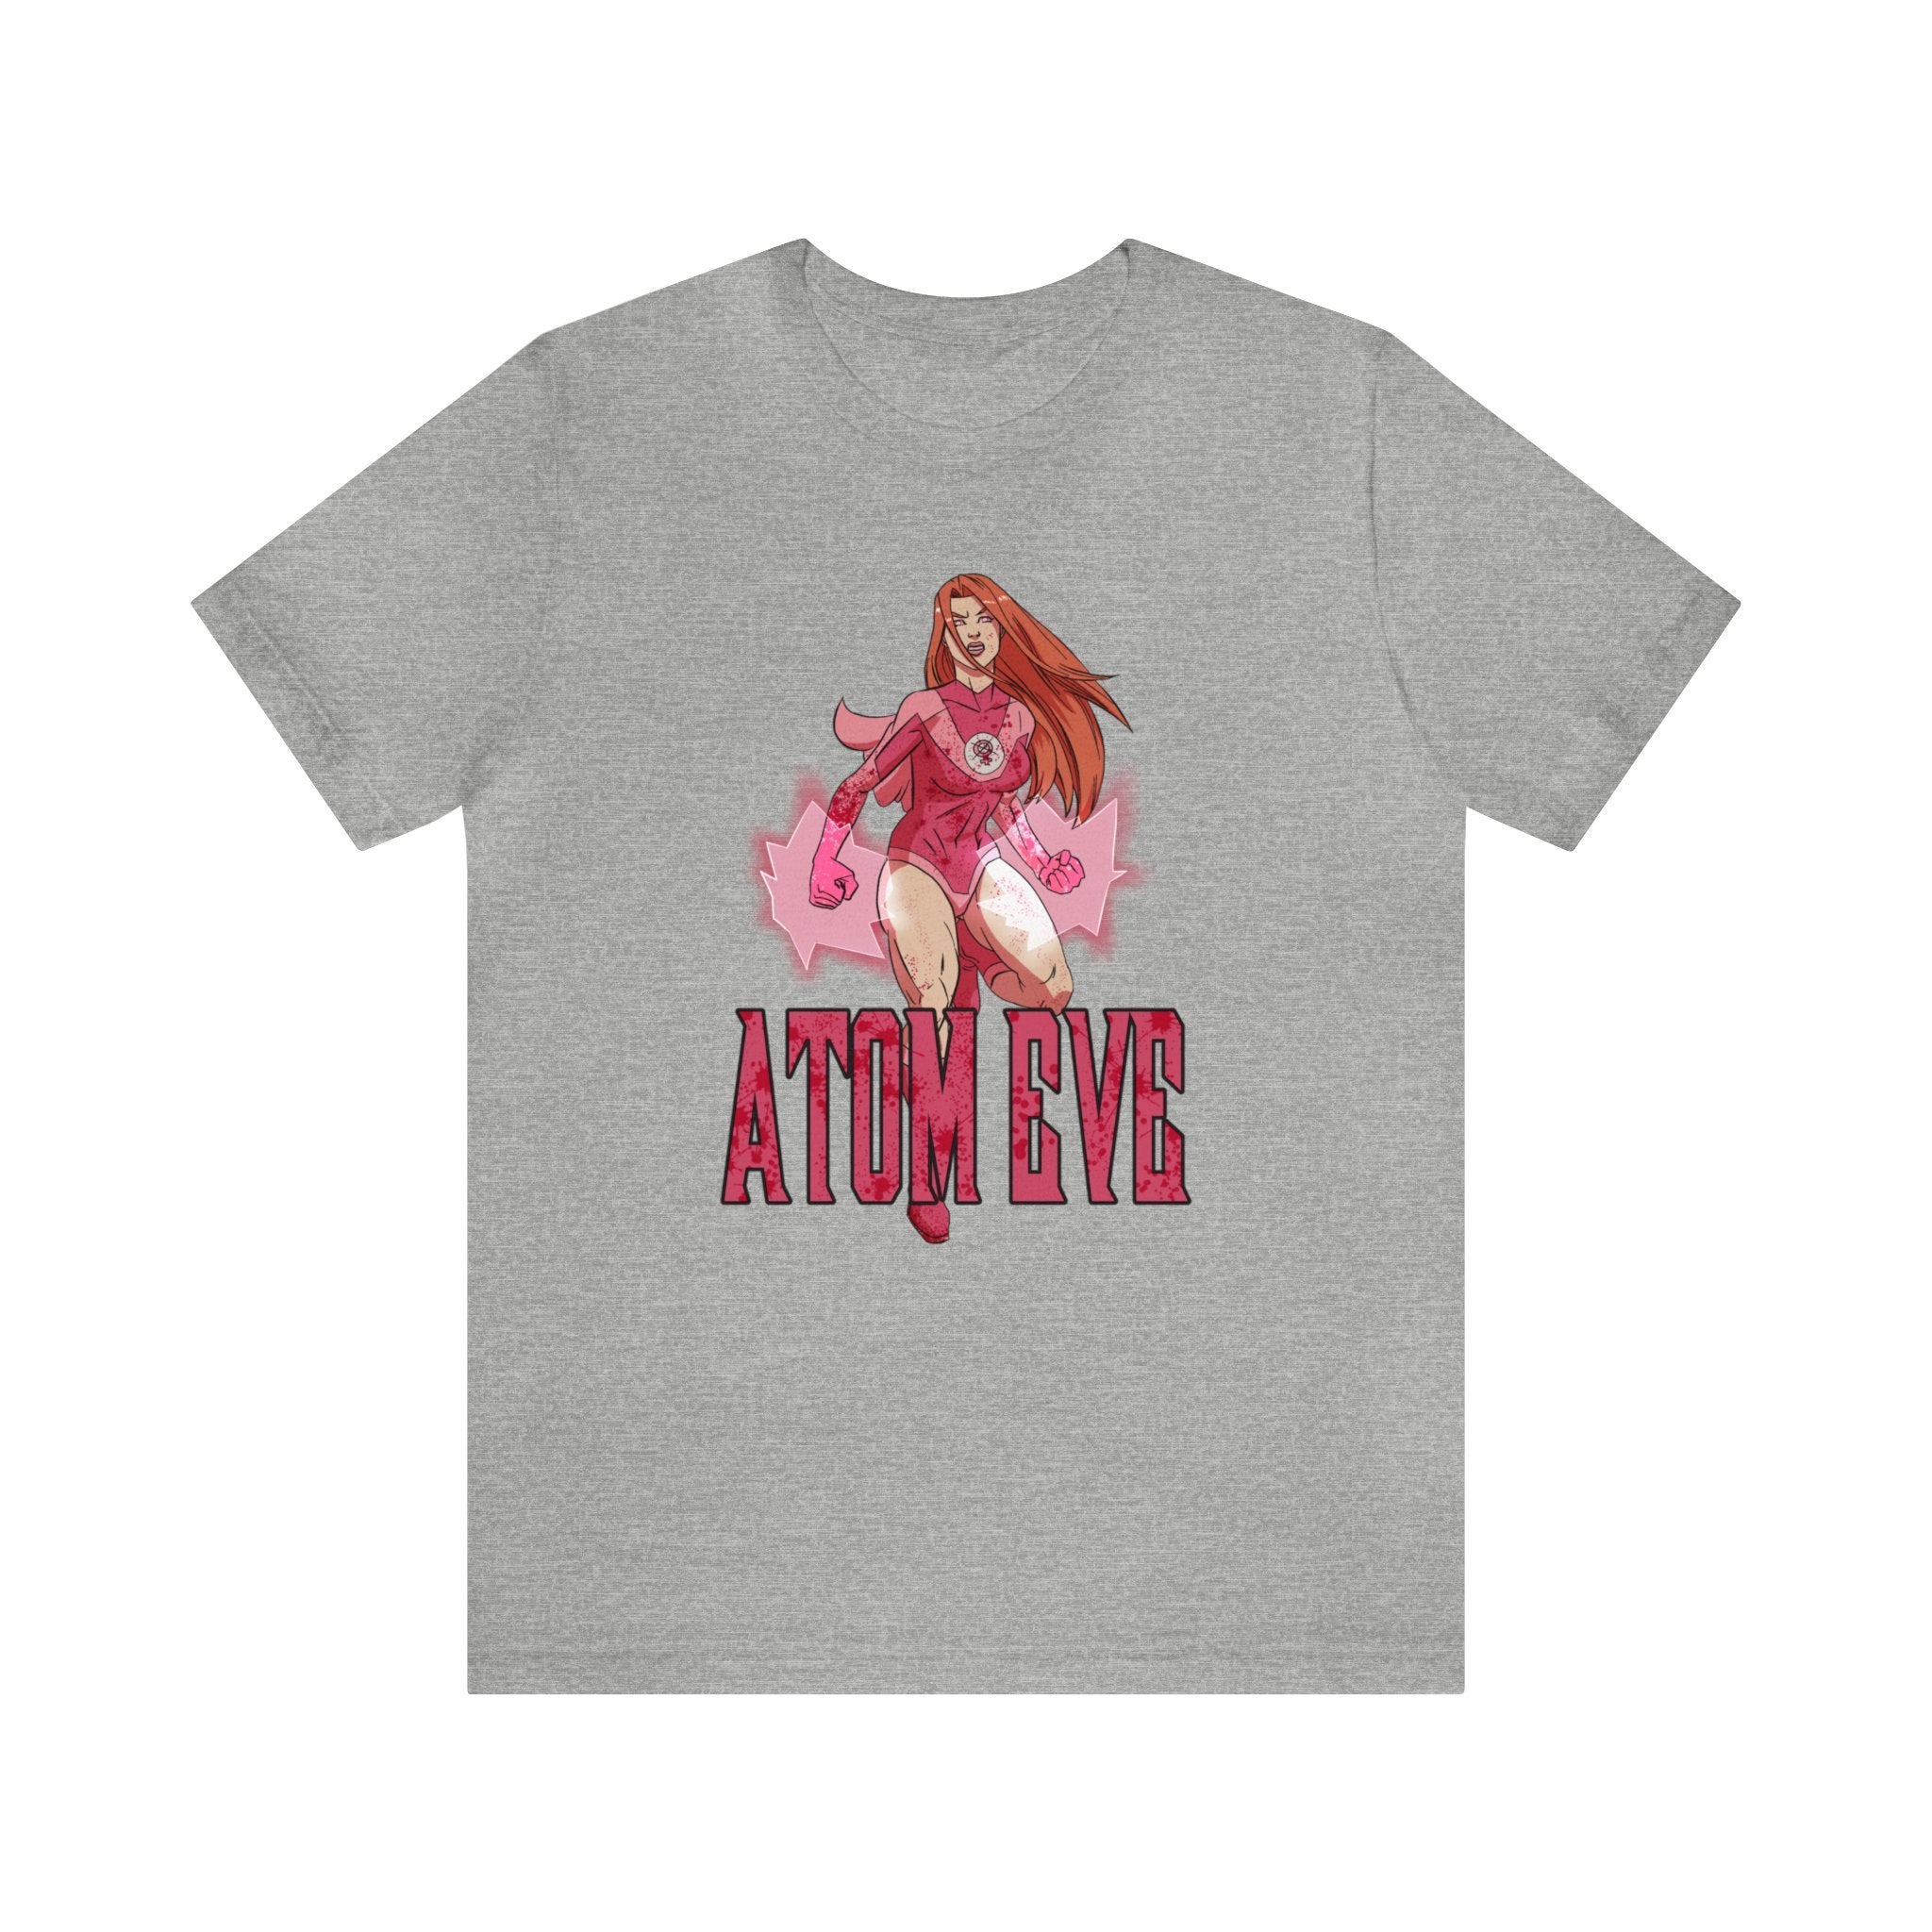 Atom Eve "Creator of Components" (T-shirt)